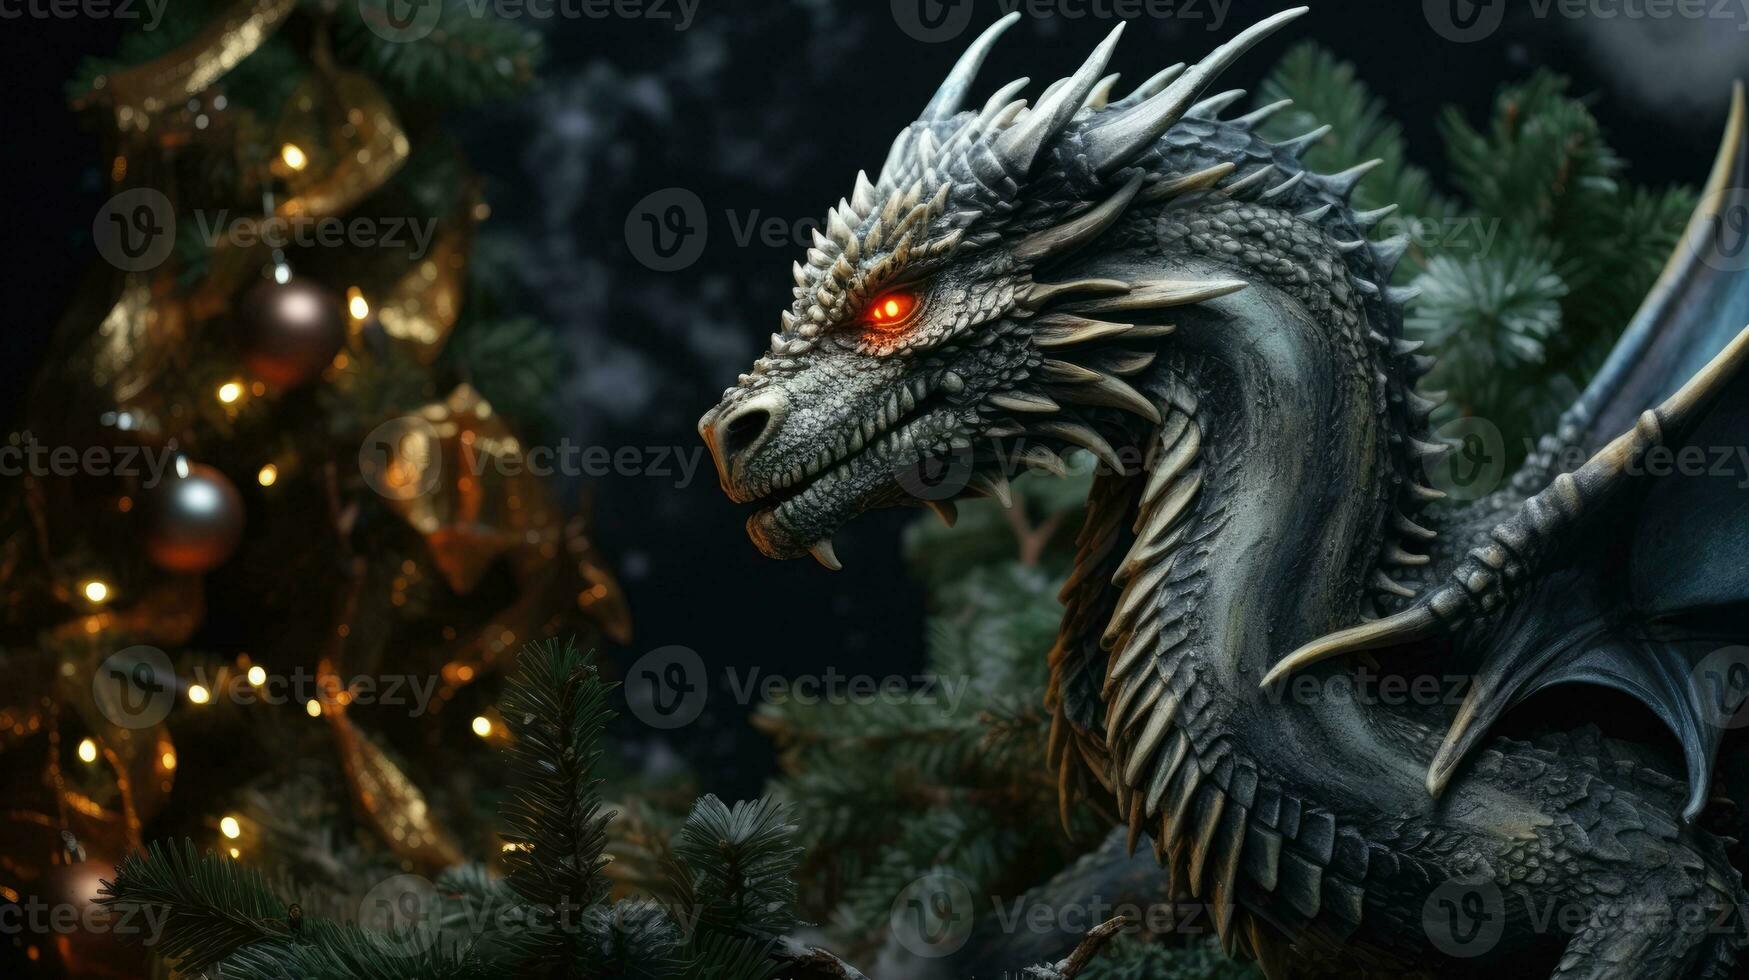 Fantasy dragon on a blurred Christmas background. New Year celebration. photo